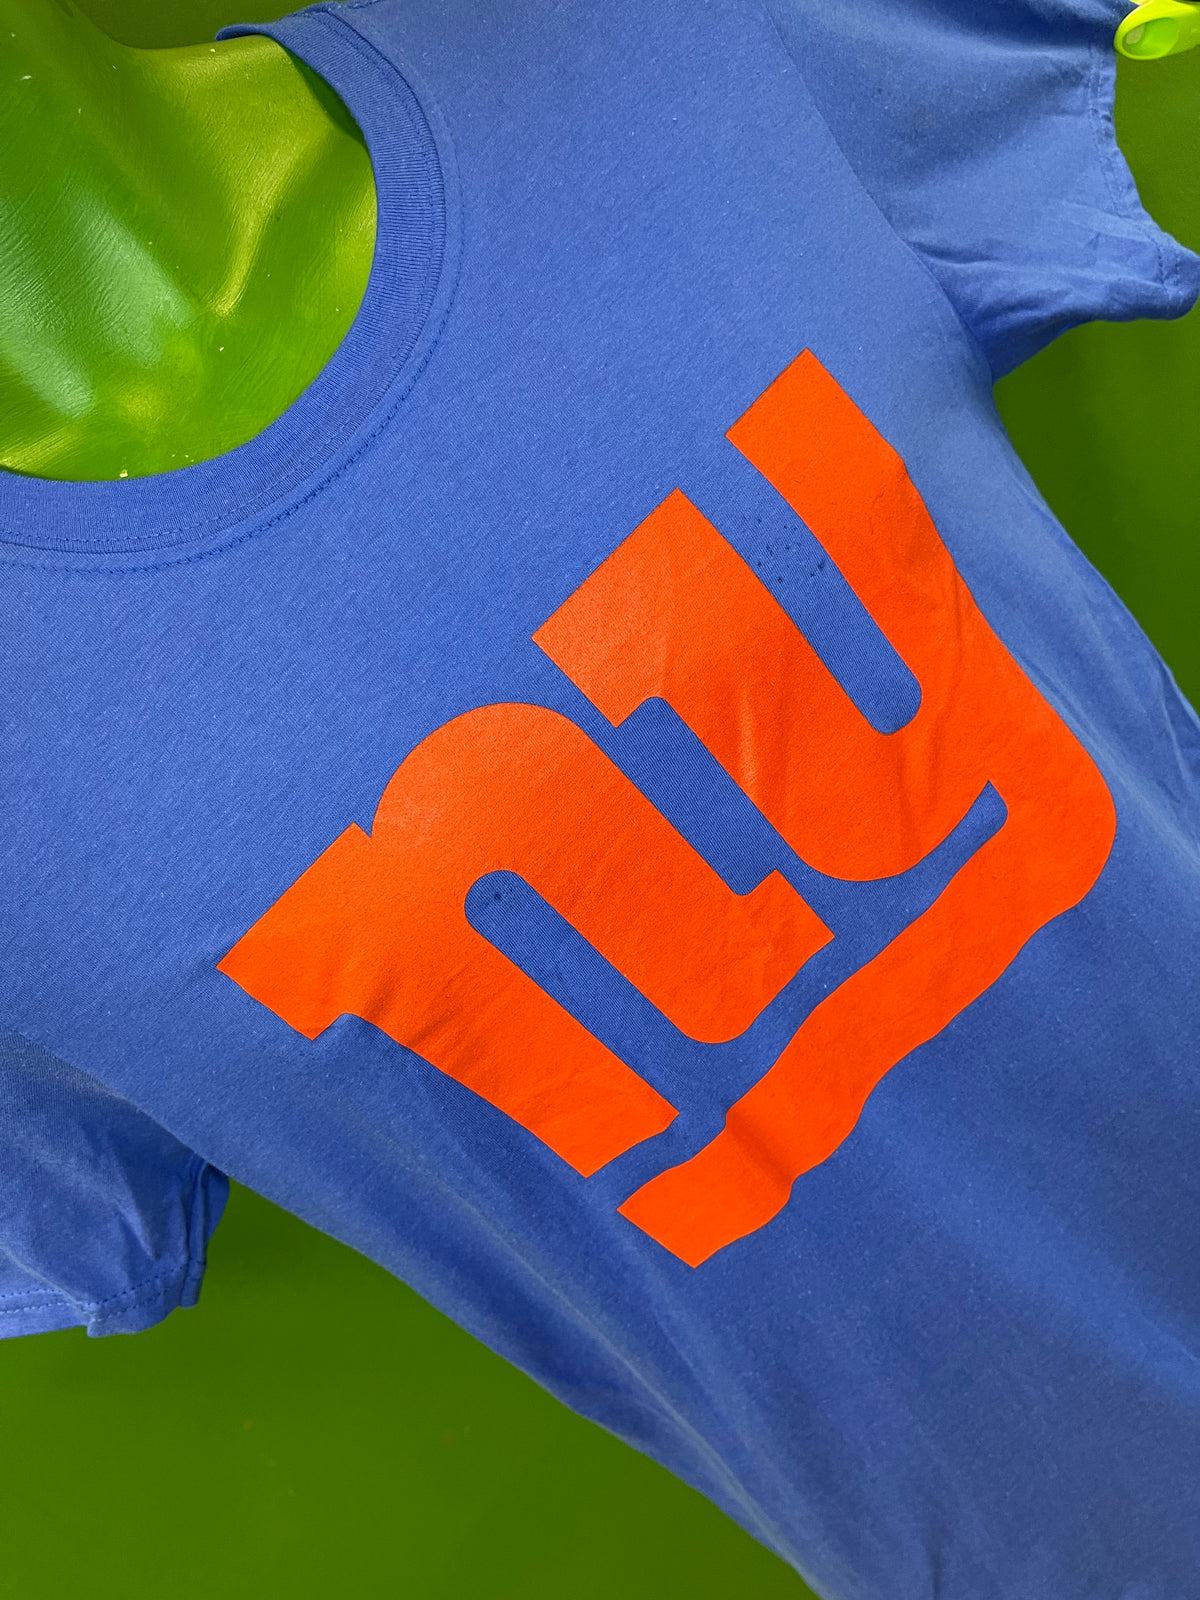 NFL New York Giants 100% Cotton T-Shirt Men's Small NWT